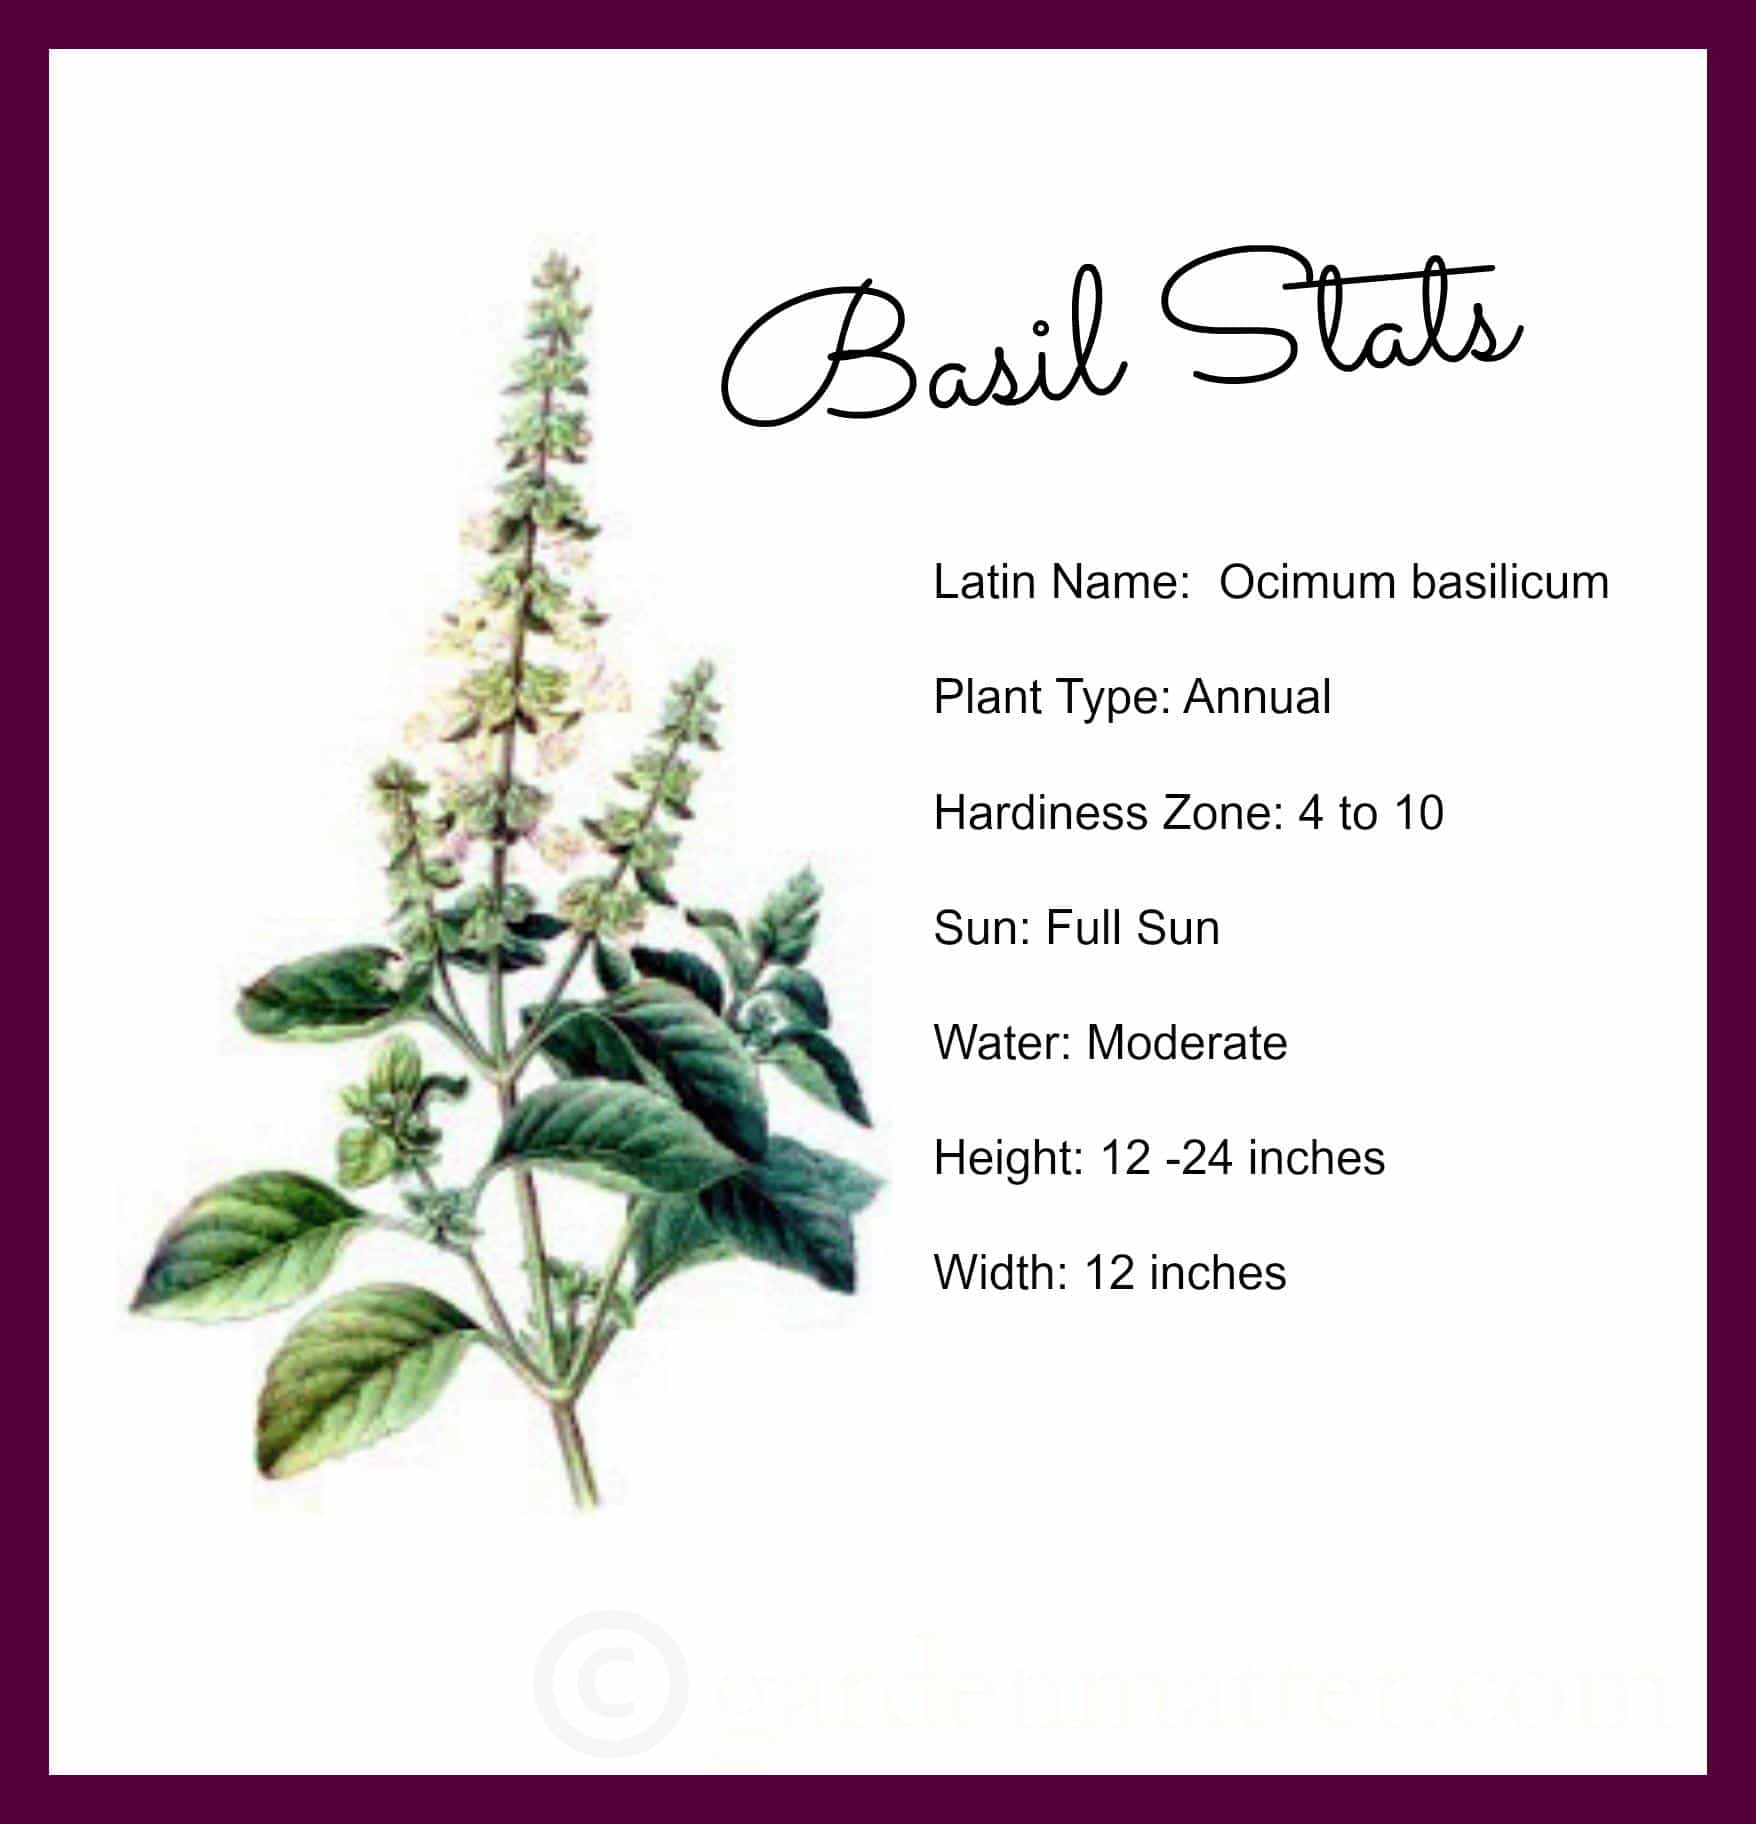 Basil Stats